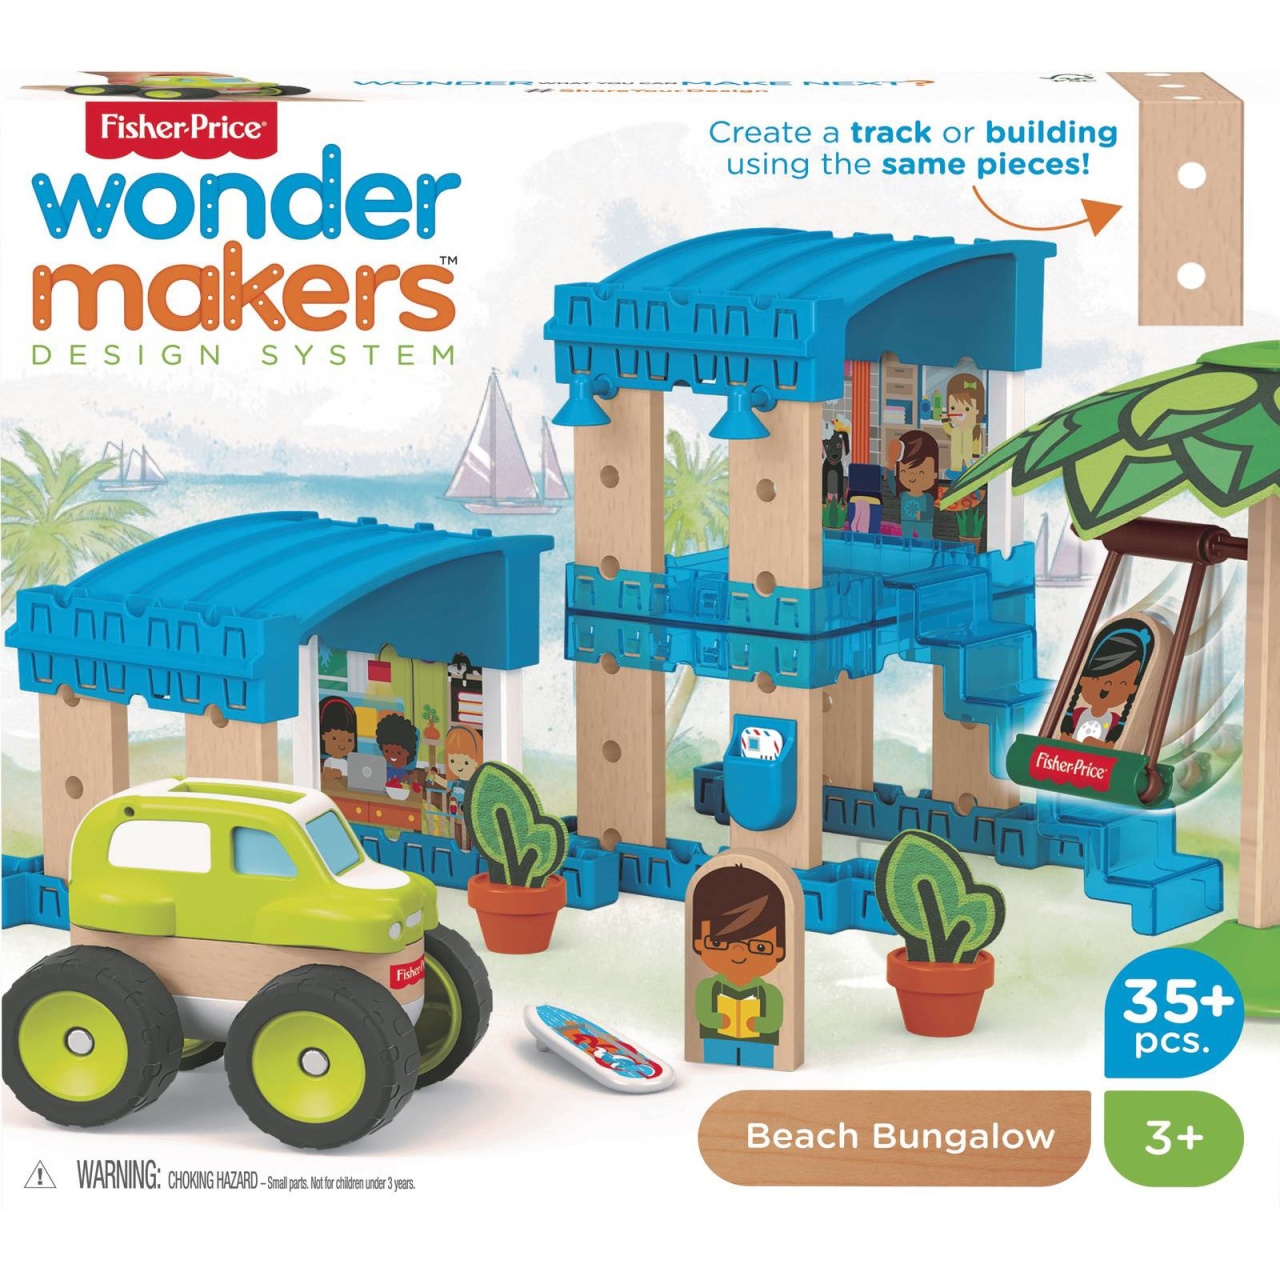 Fisher-Price Wonder makers Strandbungalow